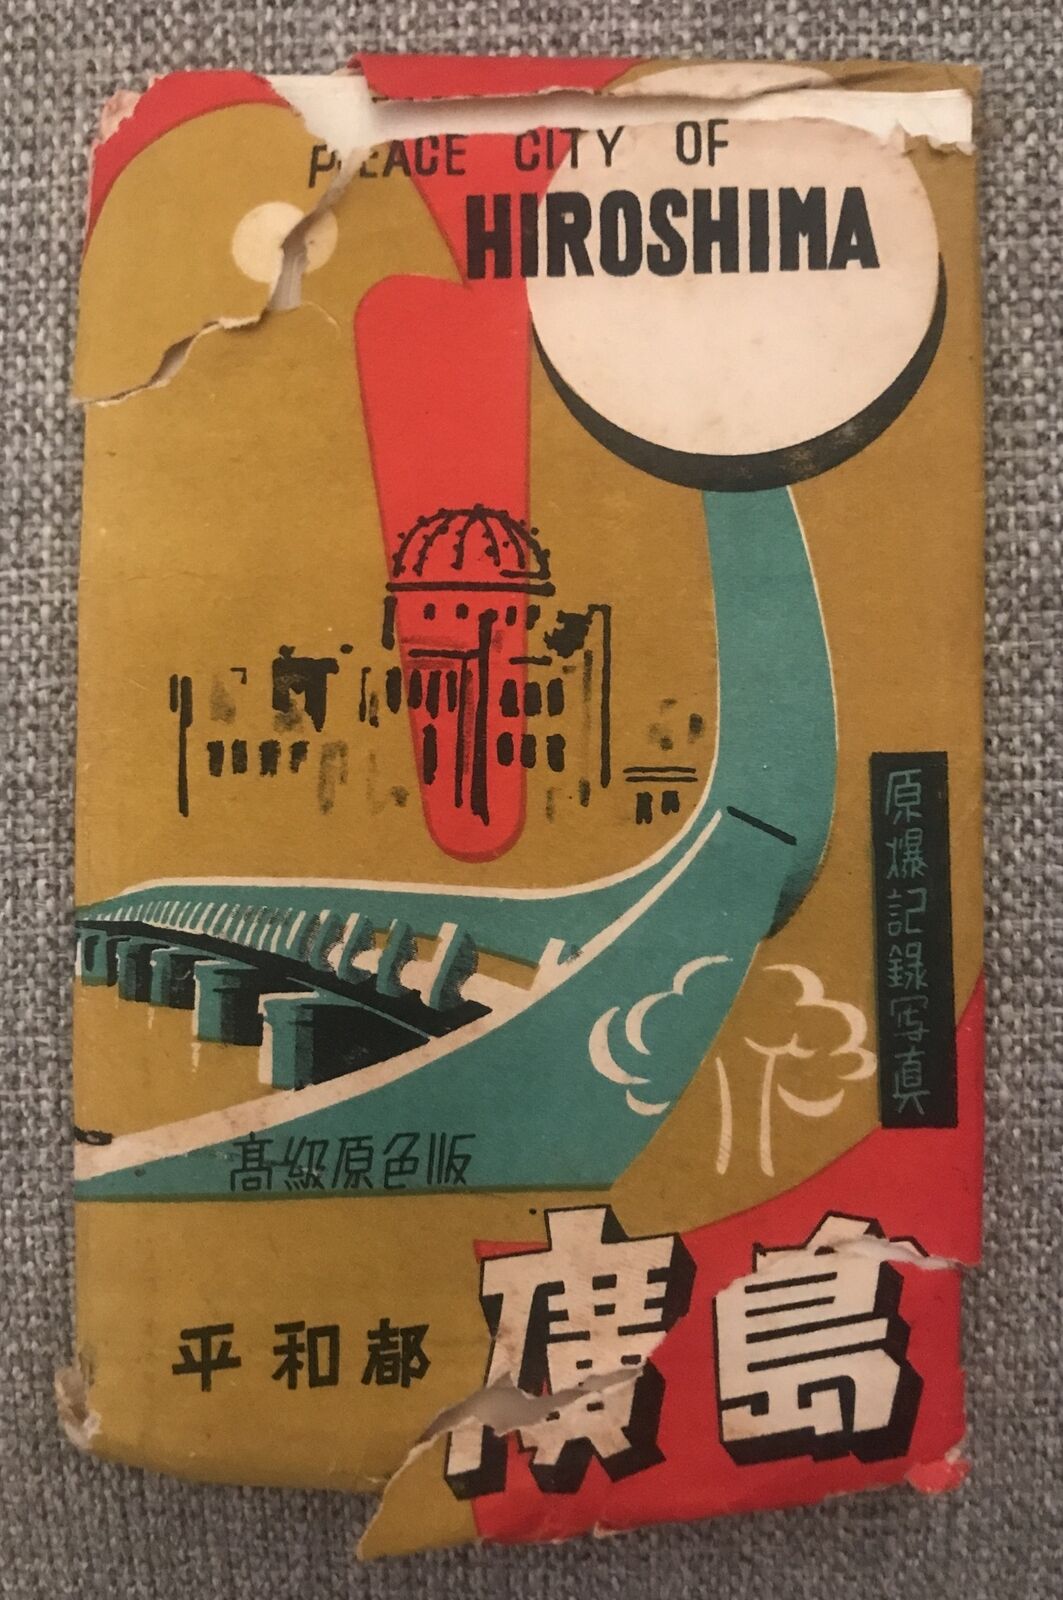 Vintage Peace City of Hiroshima postcard package (3 postcards) nuclear blast